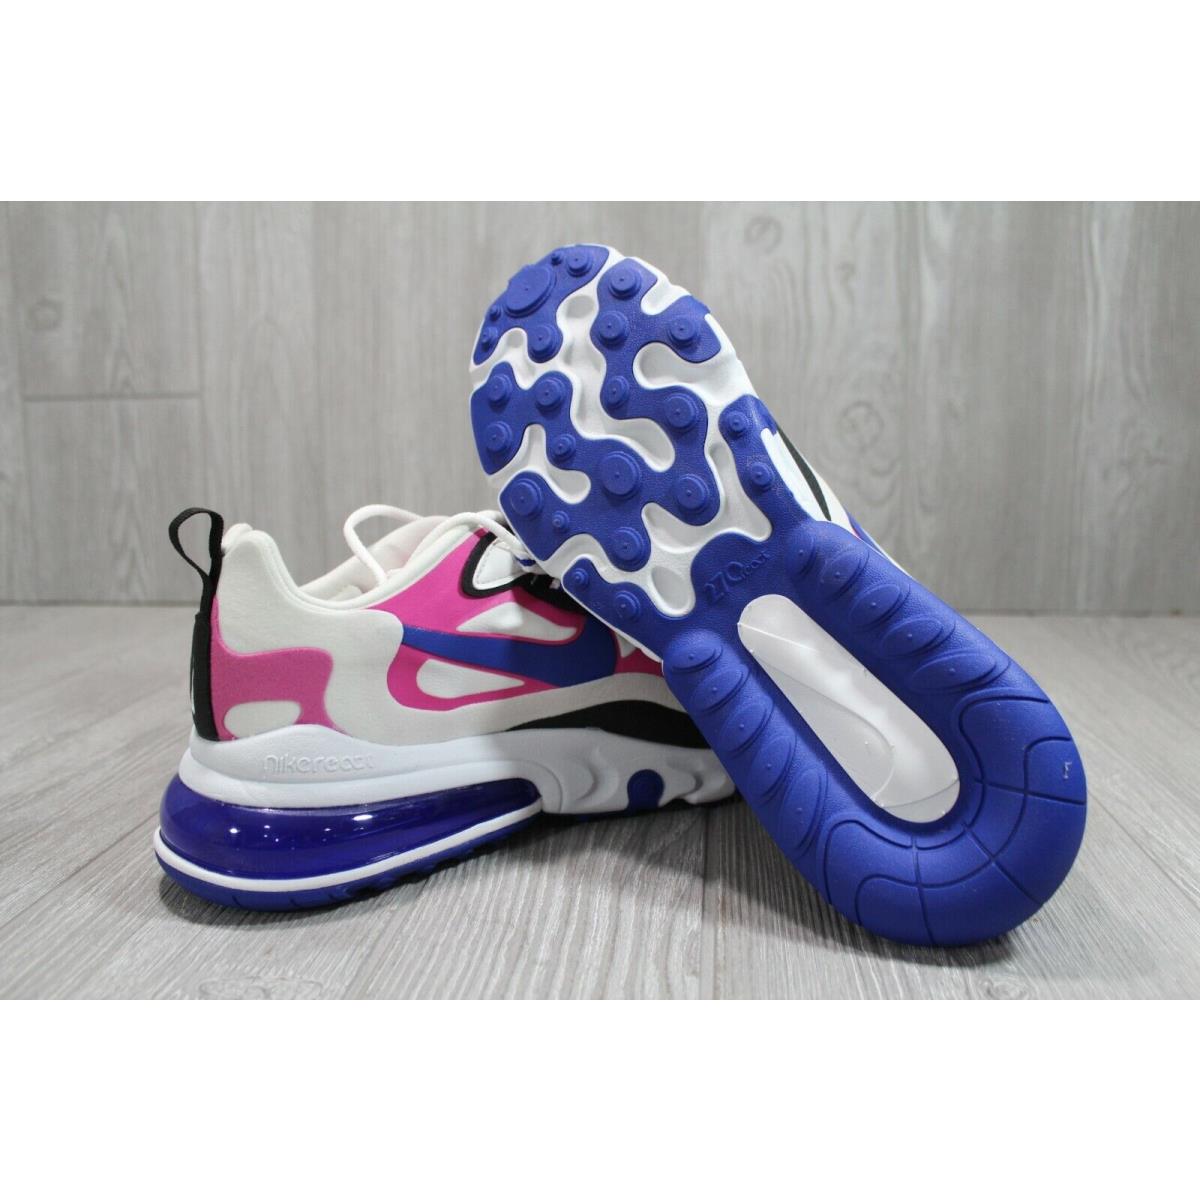 Nike shoes  - Multicolor 4